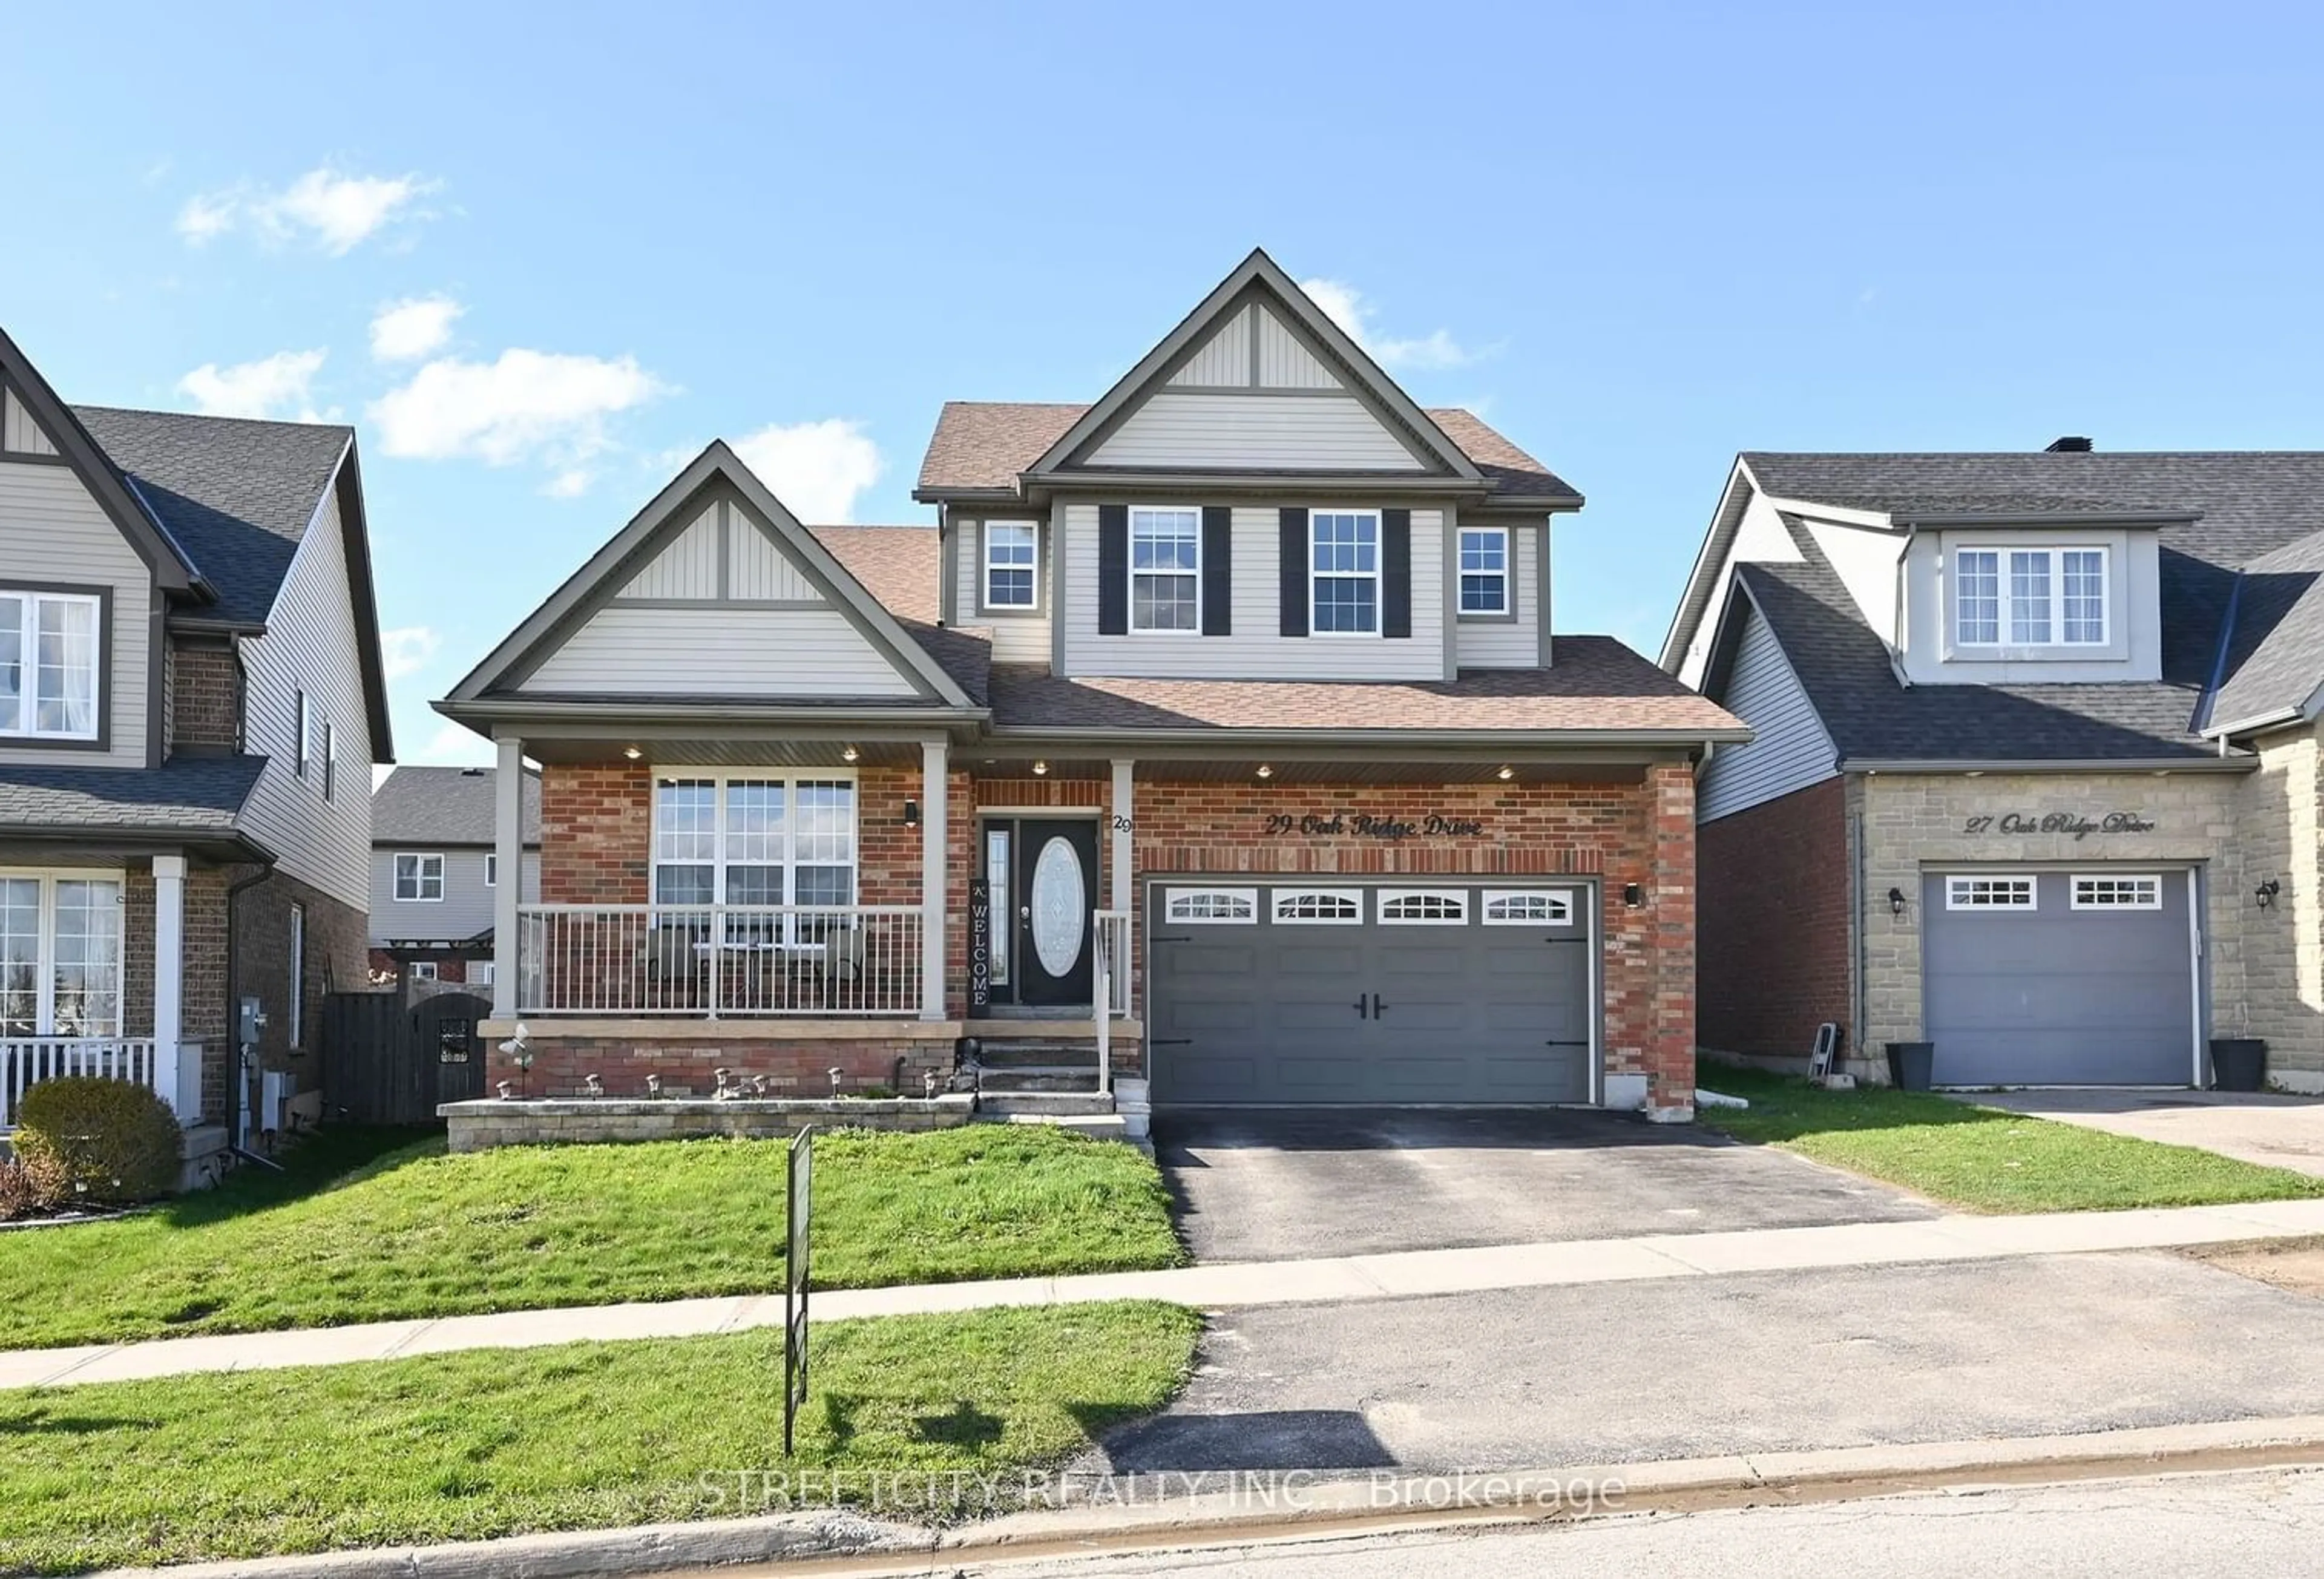 Home with brick exterior material for 29 Oak Ridge Dr, Orangeville Ontario L9W 5J6